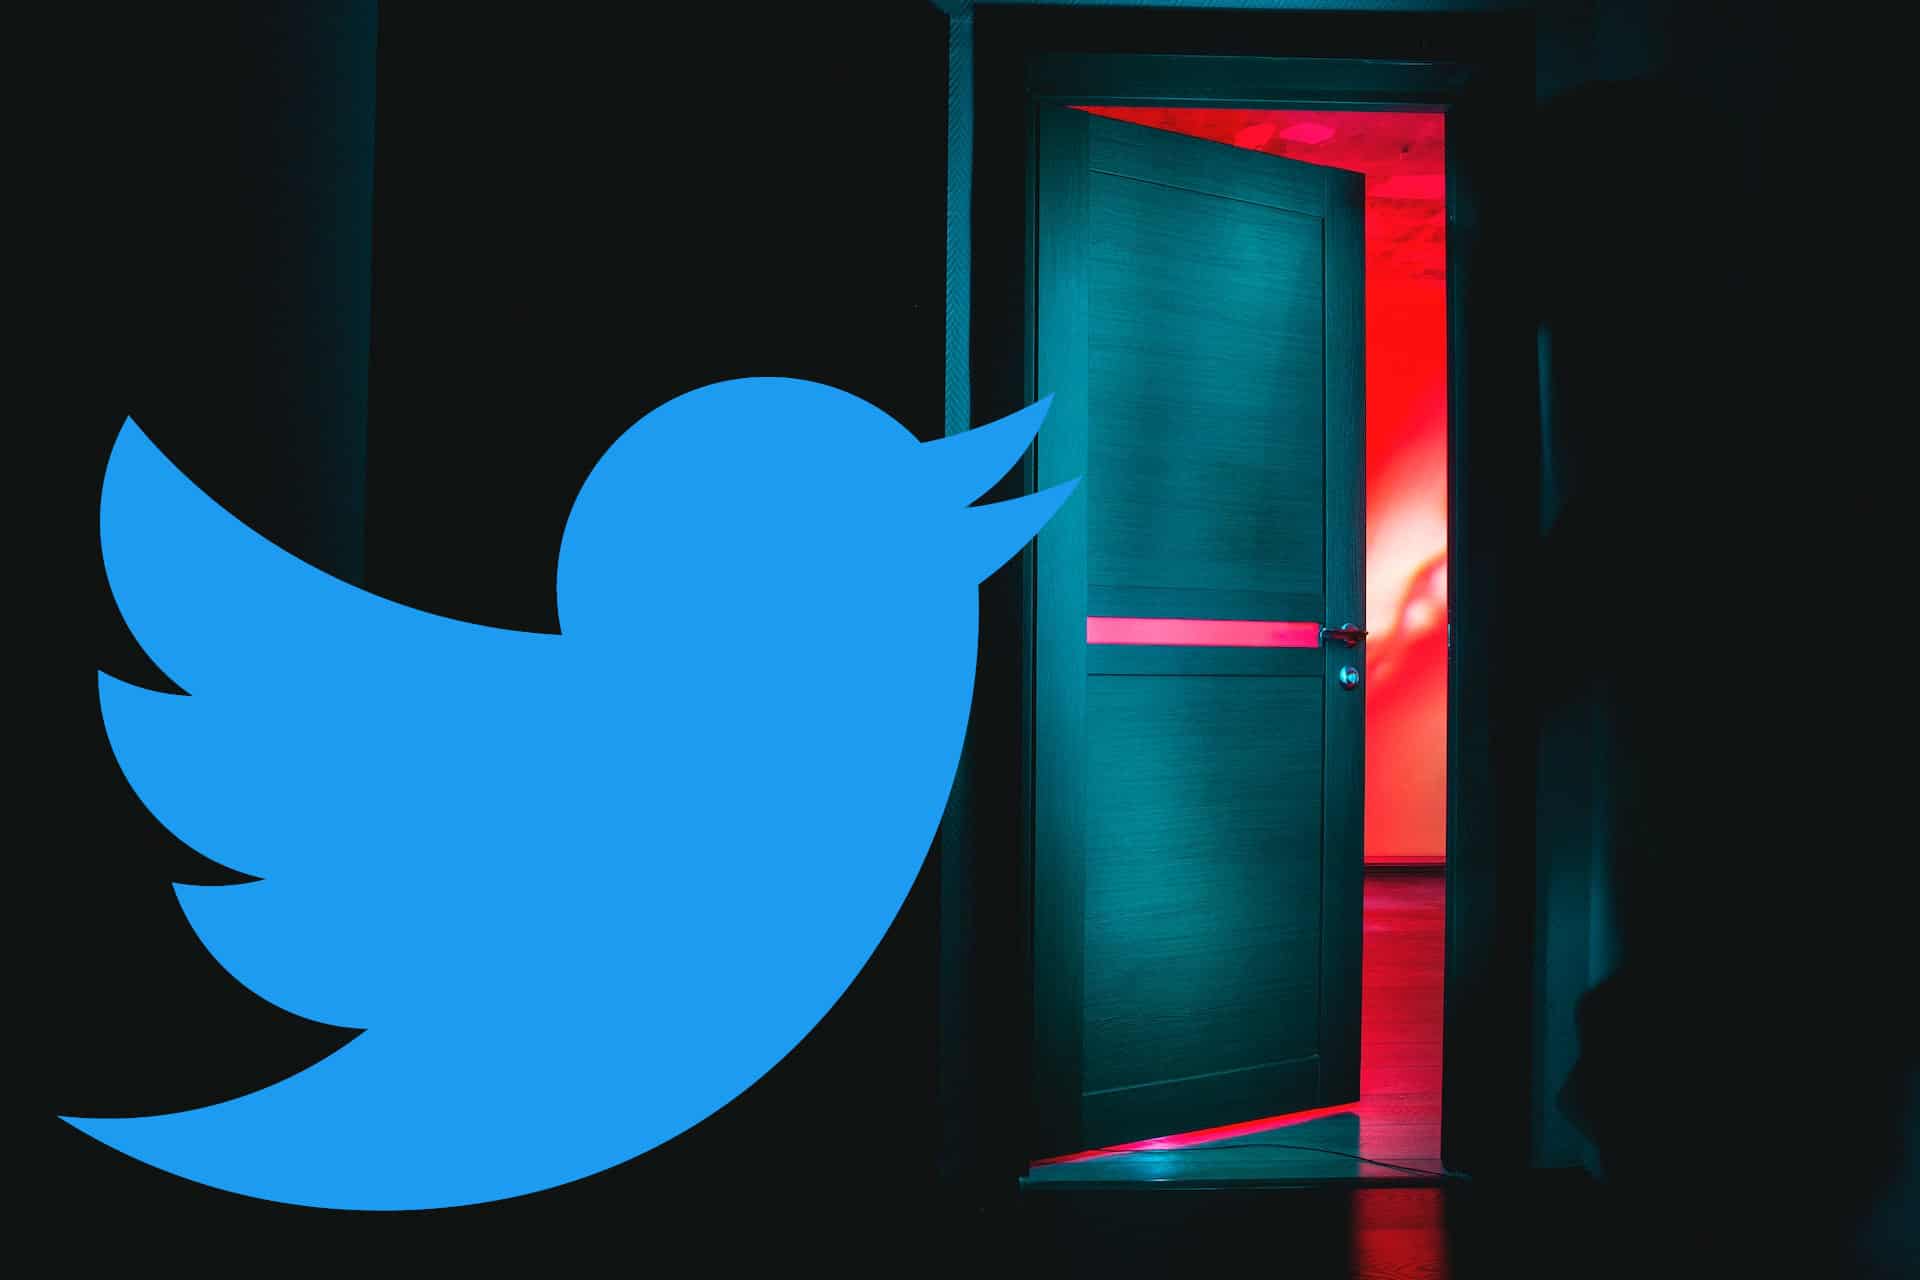 The Twitter logo before an ominous door.